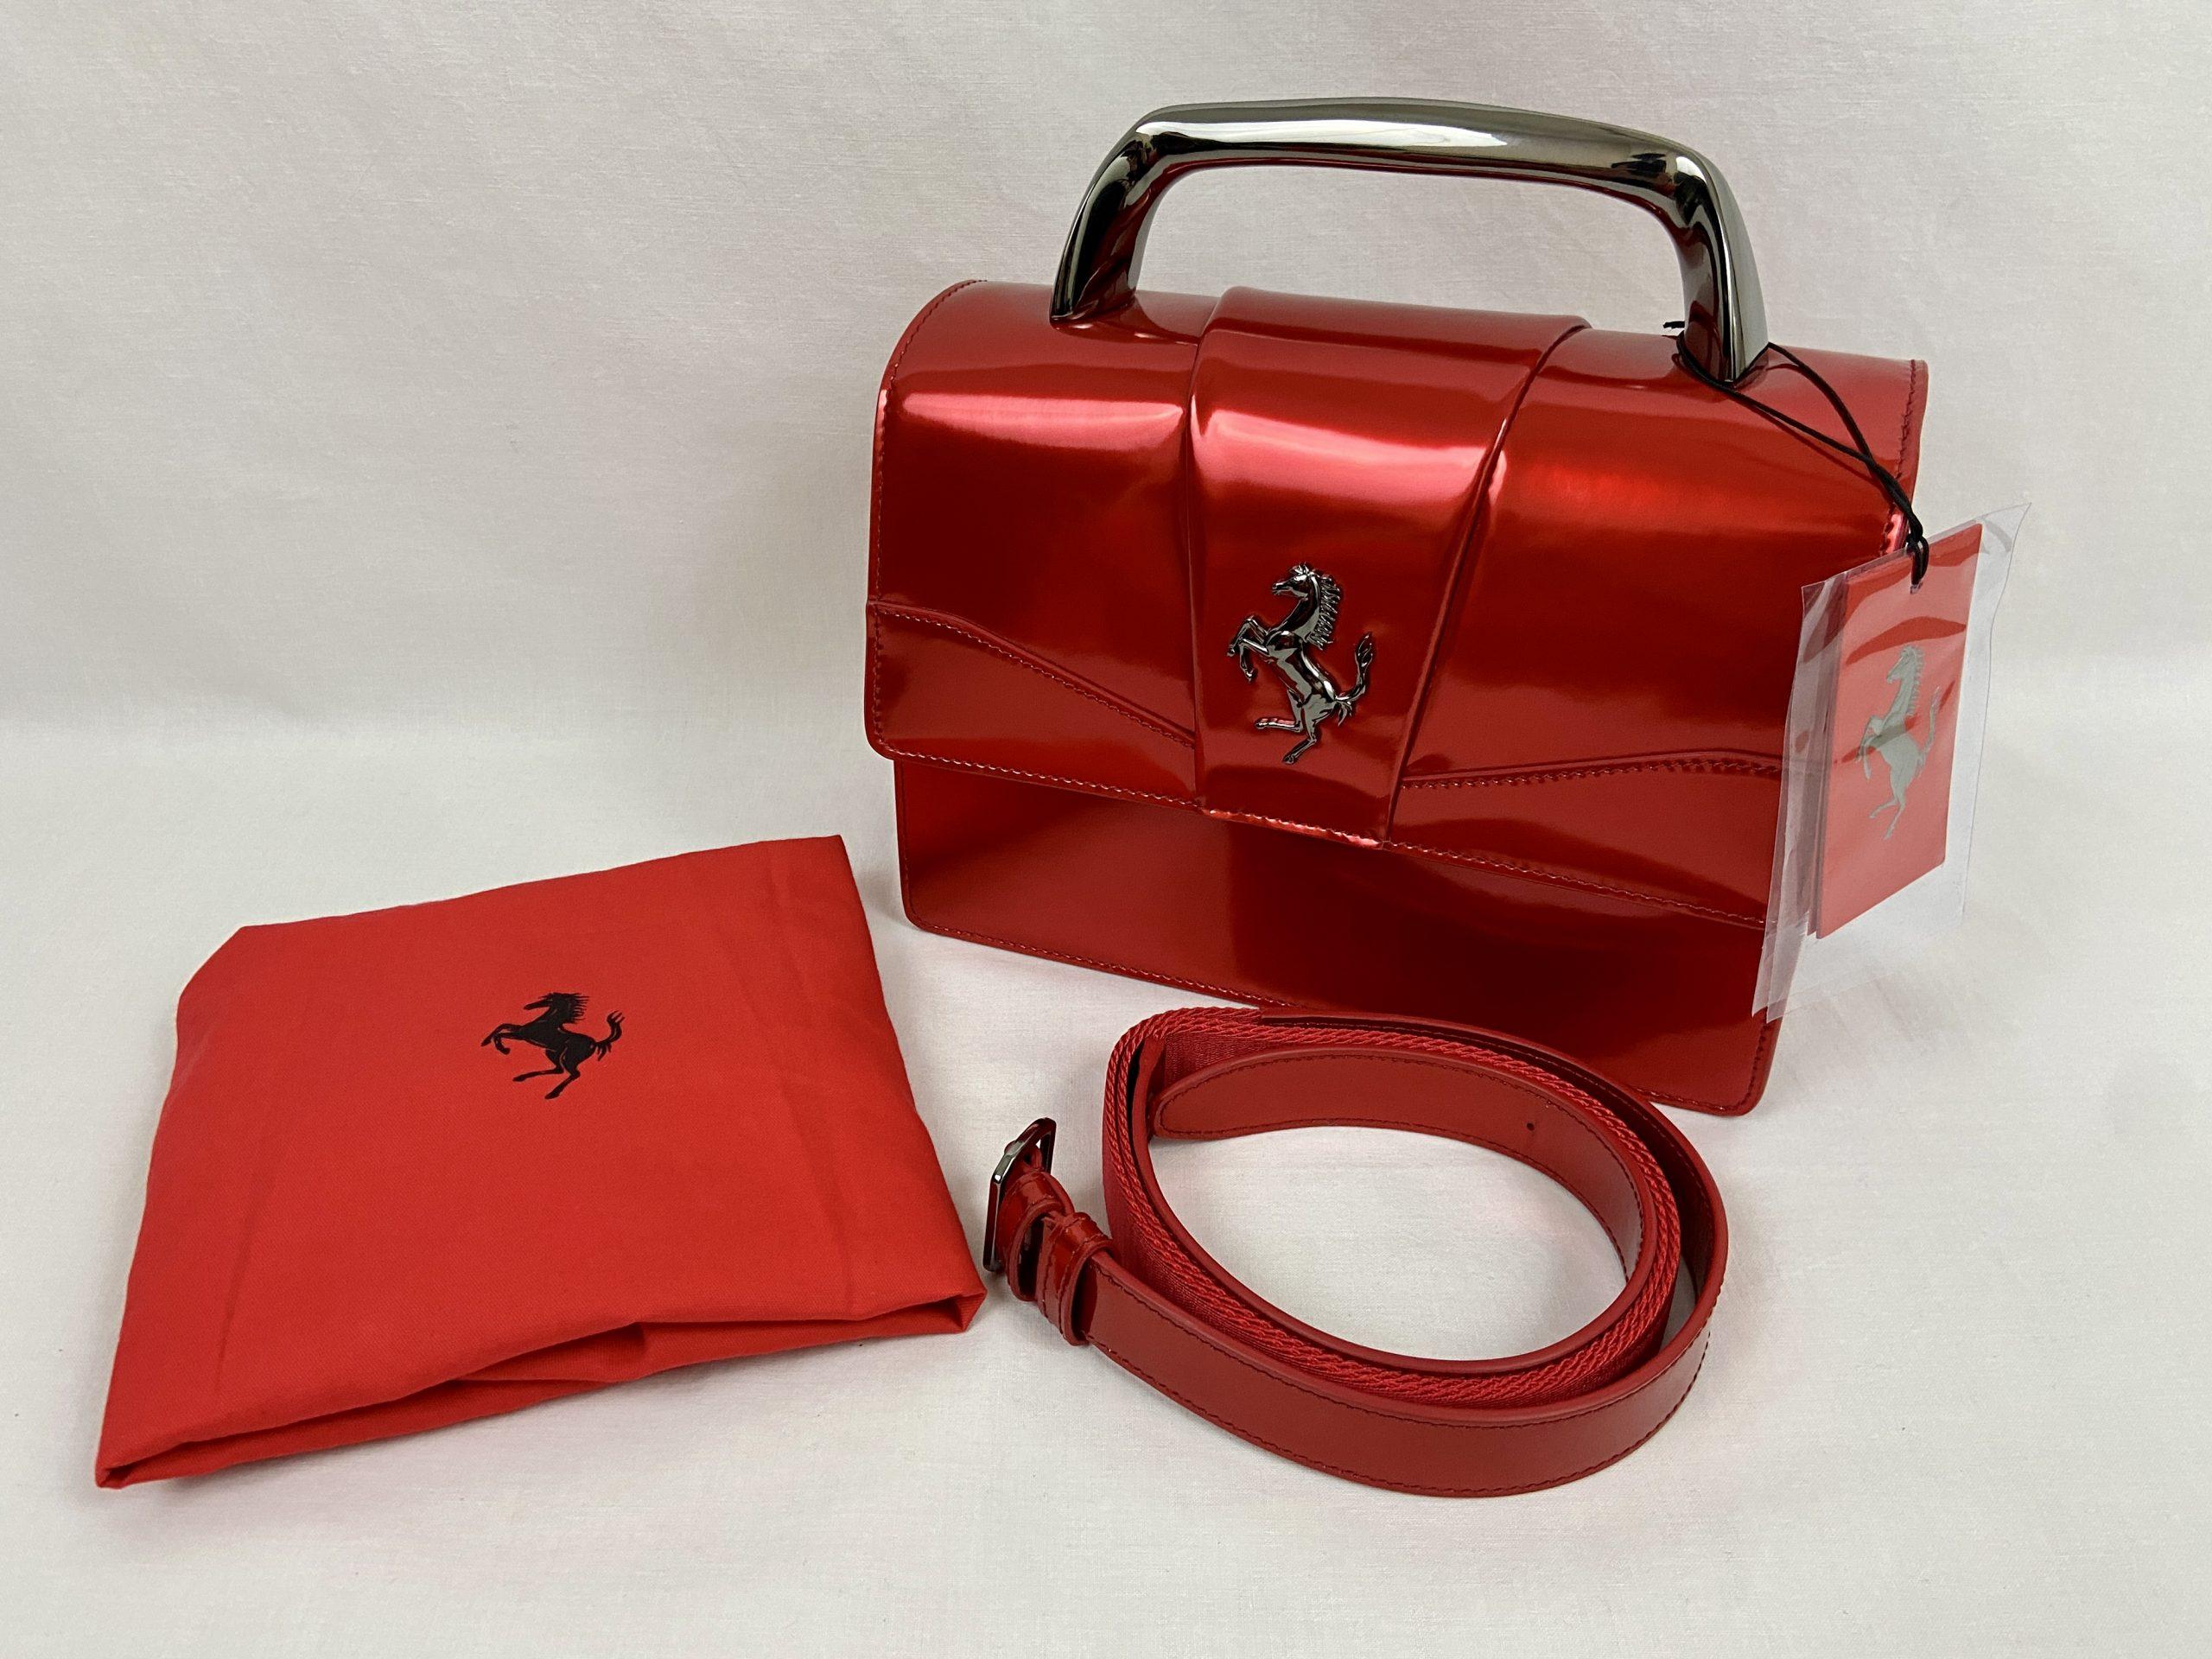 Ferrari Handbag #ferraristore #ferrari #handbag #puma | Handbag, Bags,  Womens tote bags